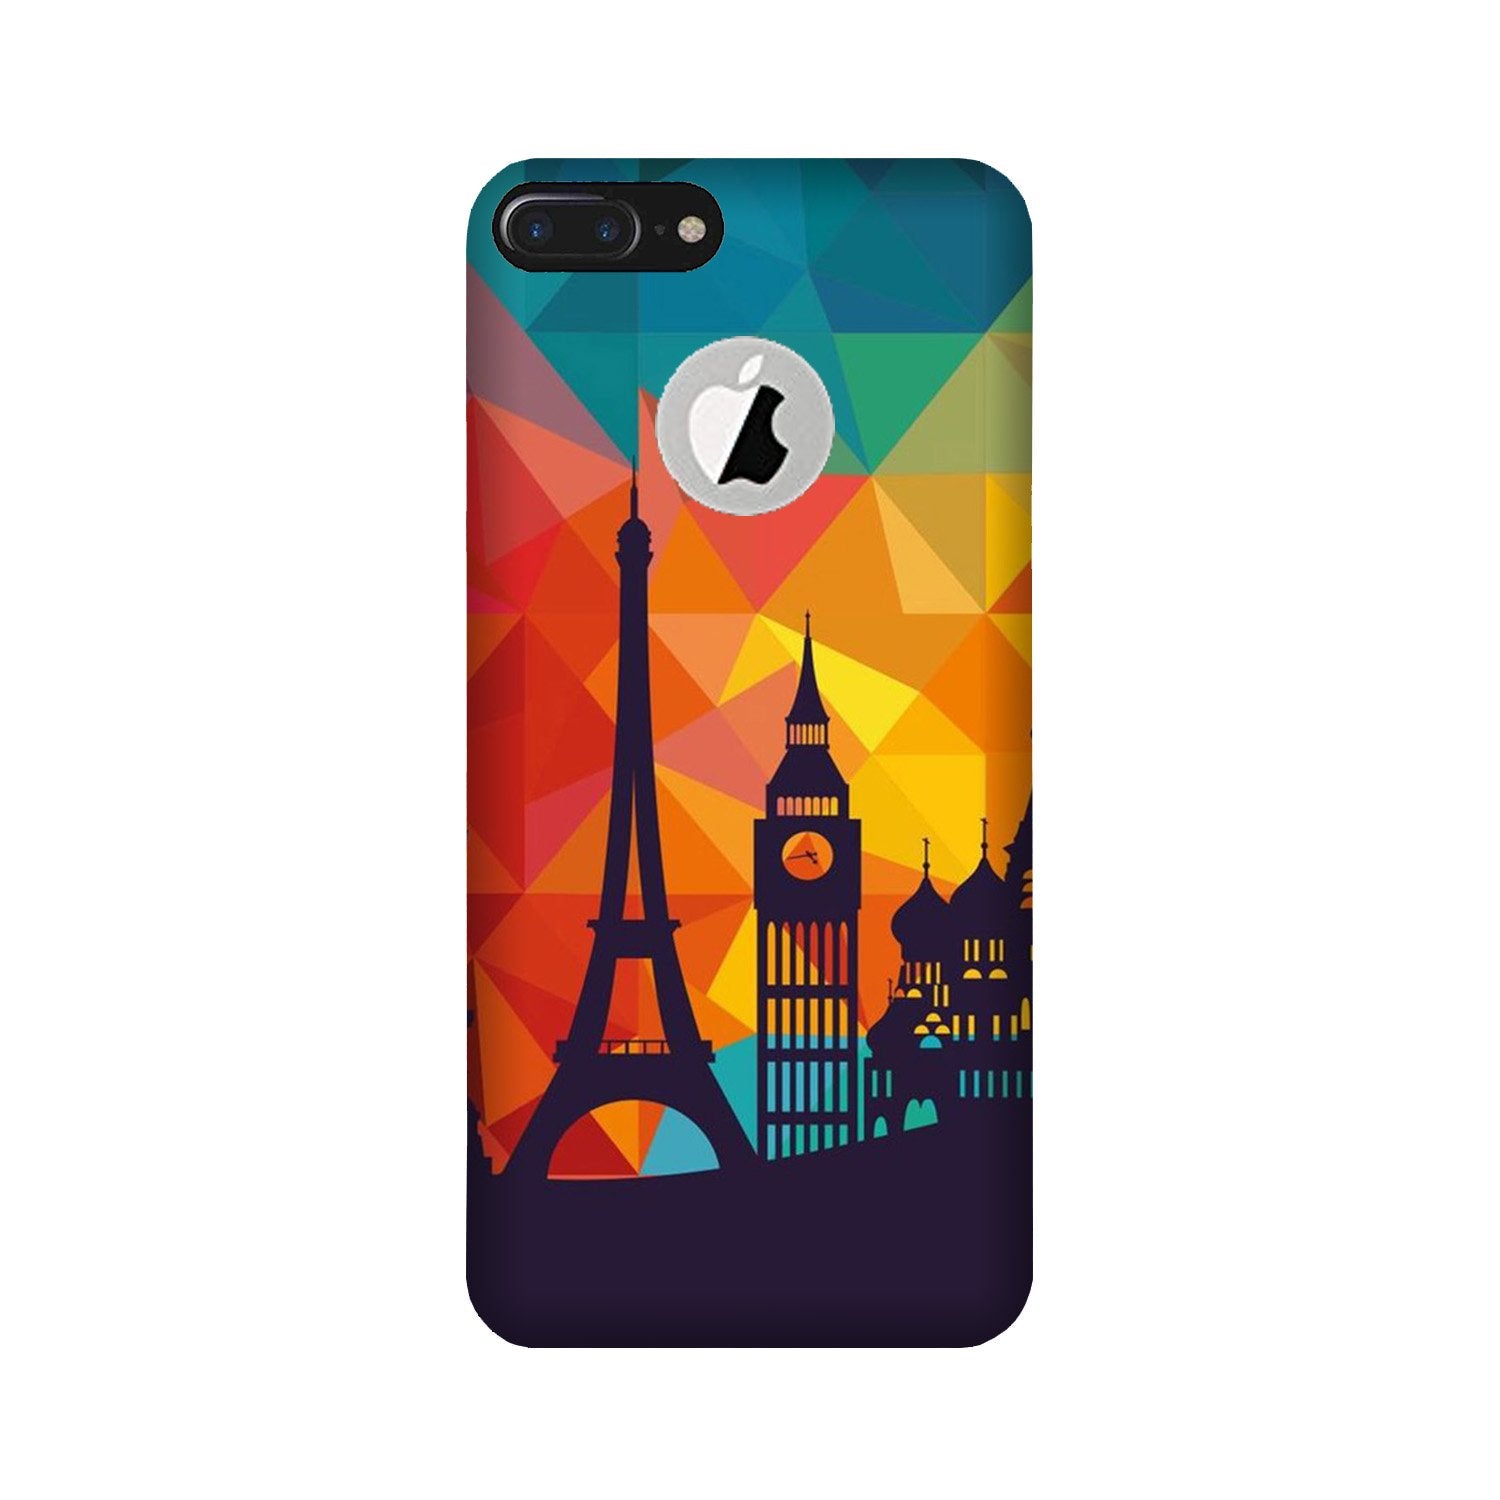 Eiffel Tower2 Case for iPhone 7 Plus logo cut